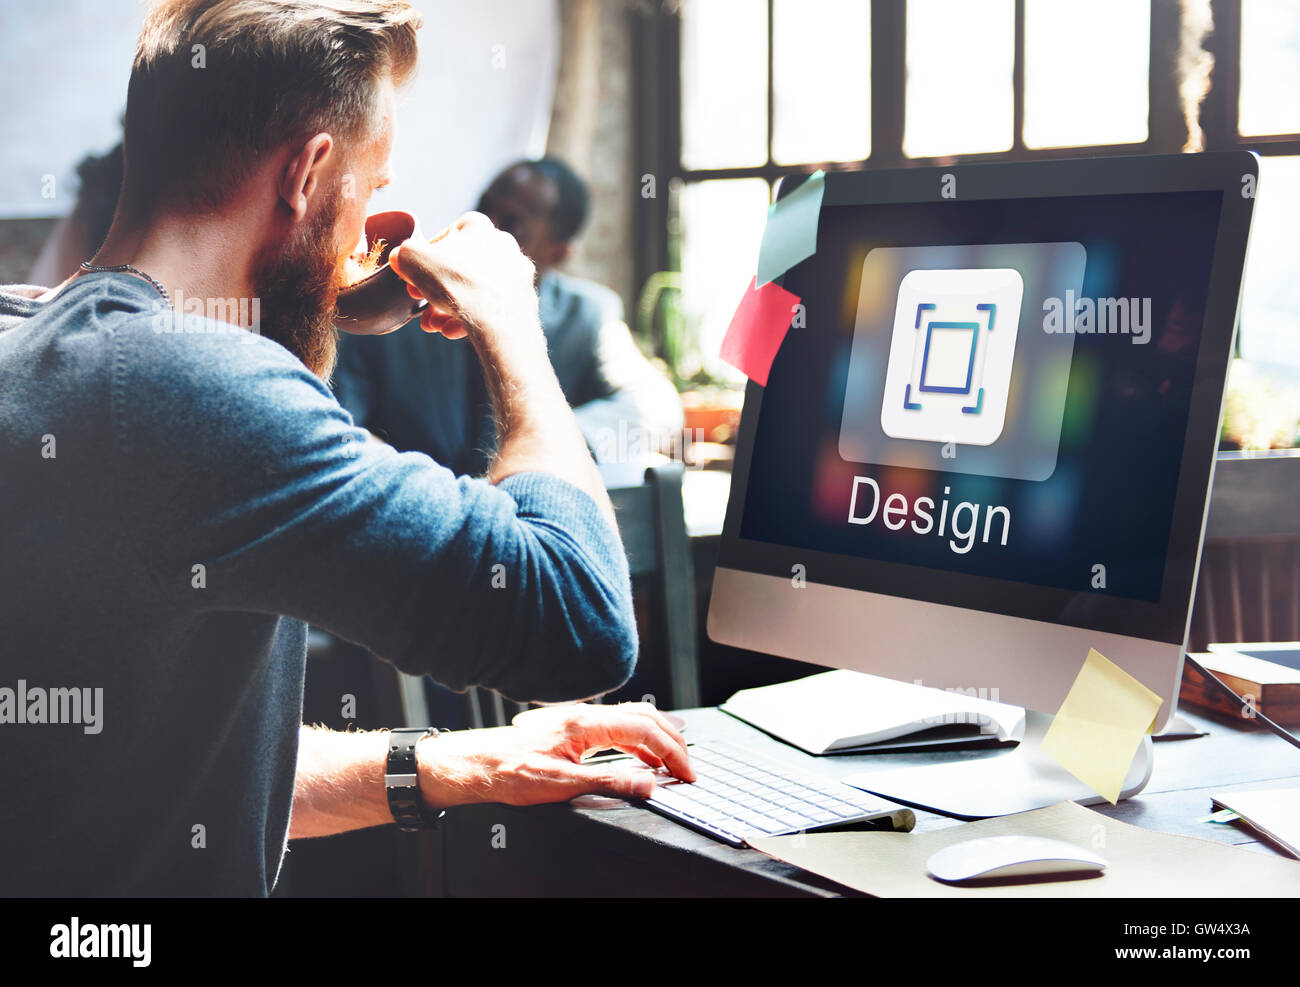 Application Design Ideas Innovation Graphic Concept Stock Photo